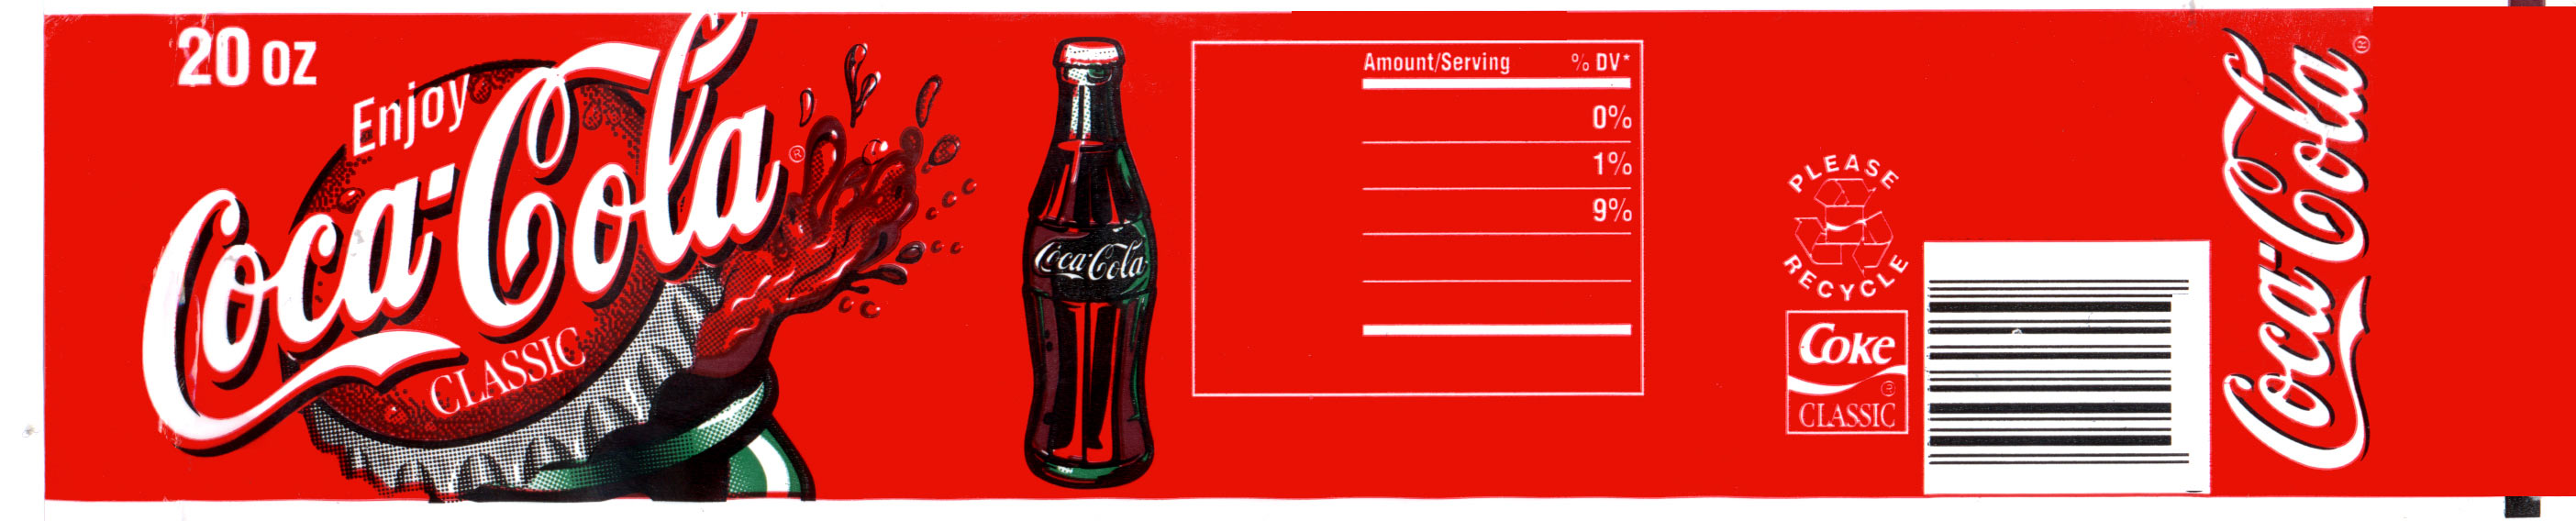 coca-cola-label-template-printable-label-templates